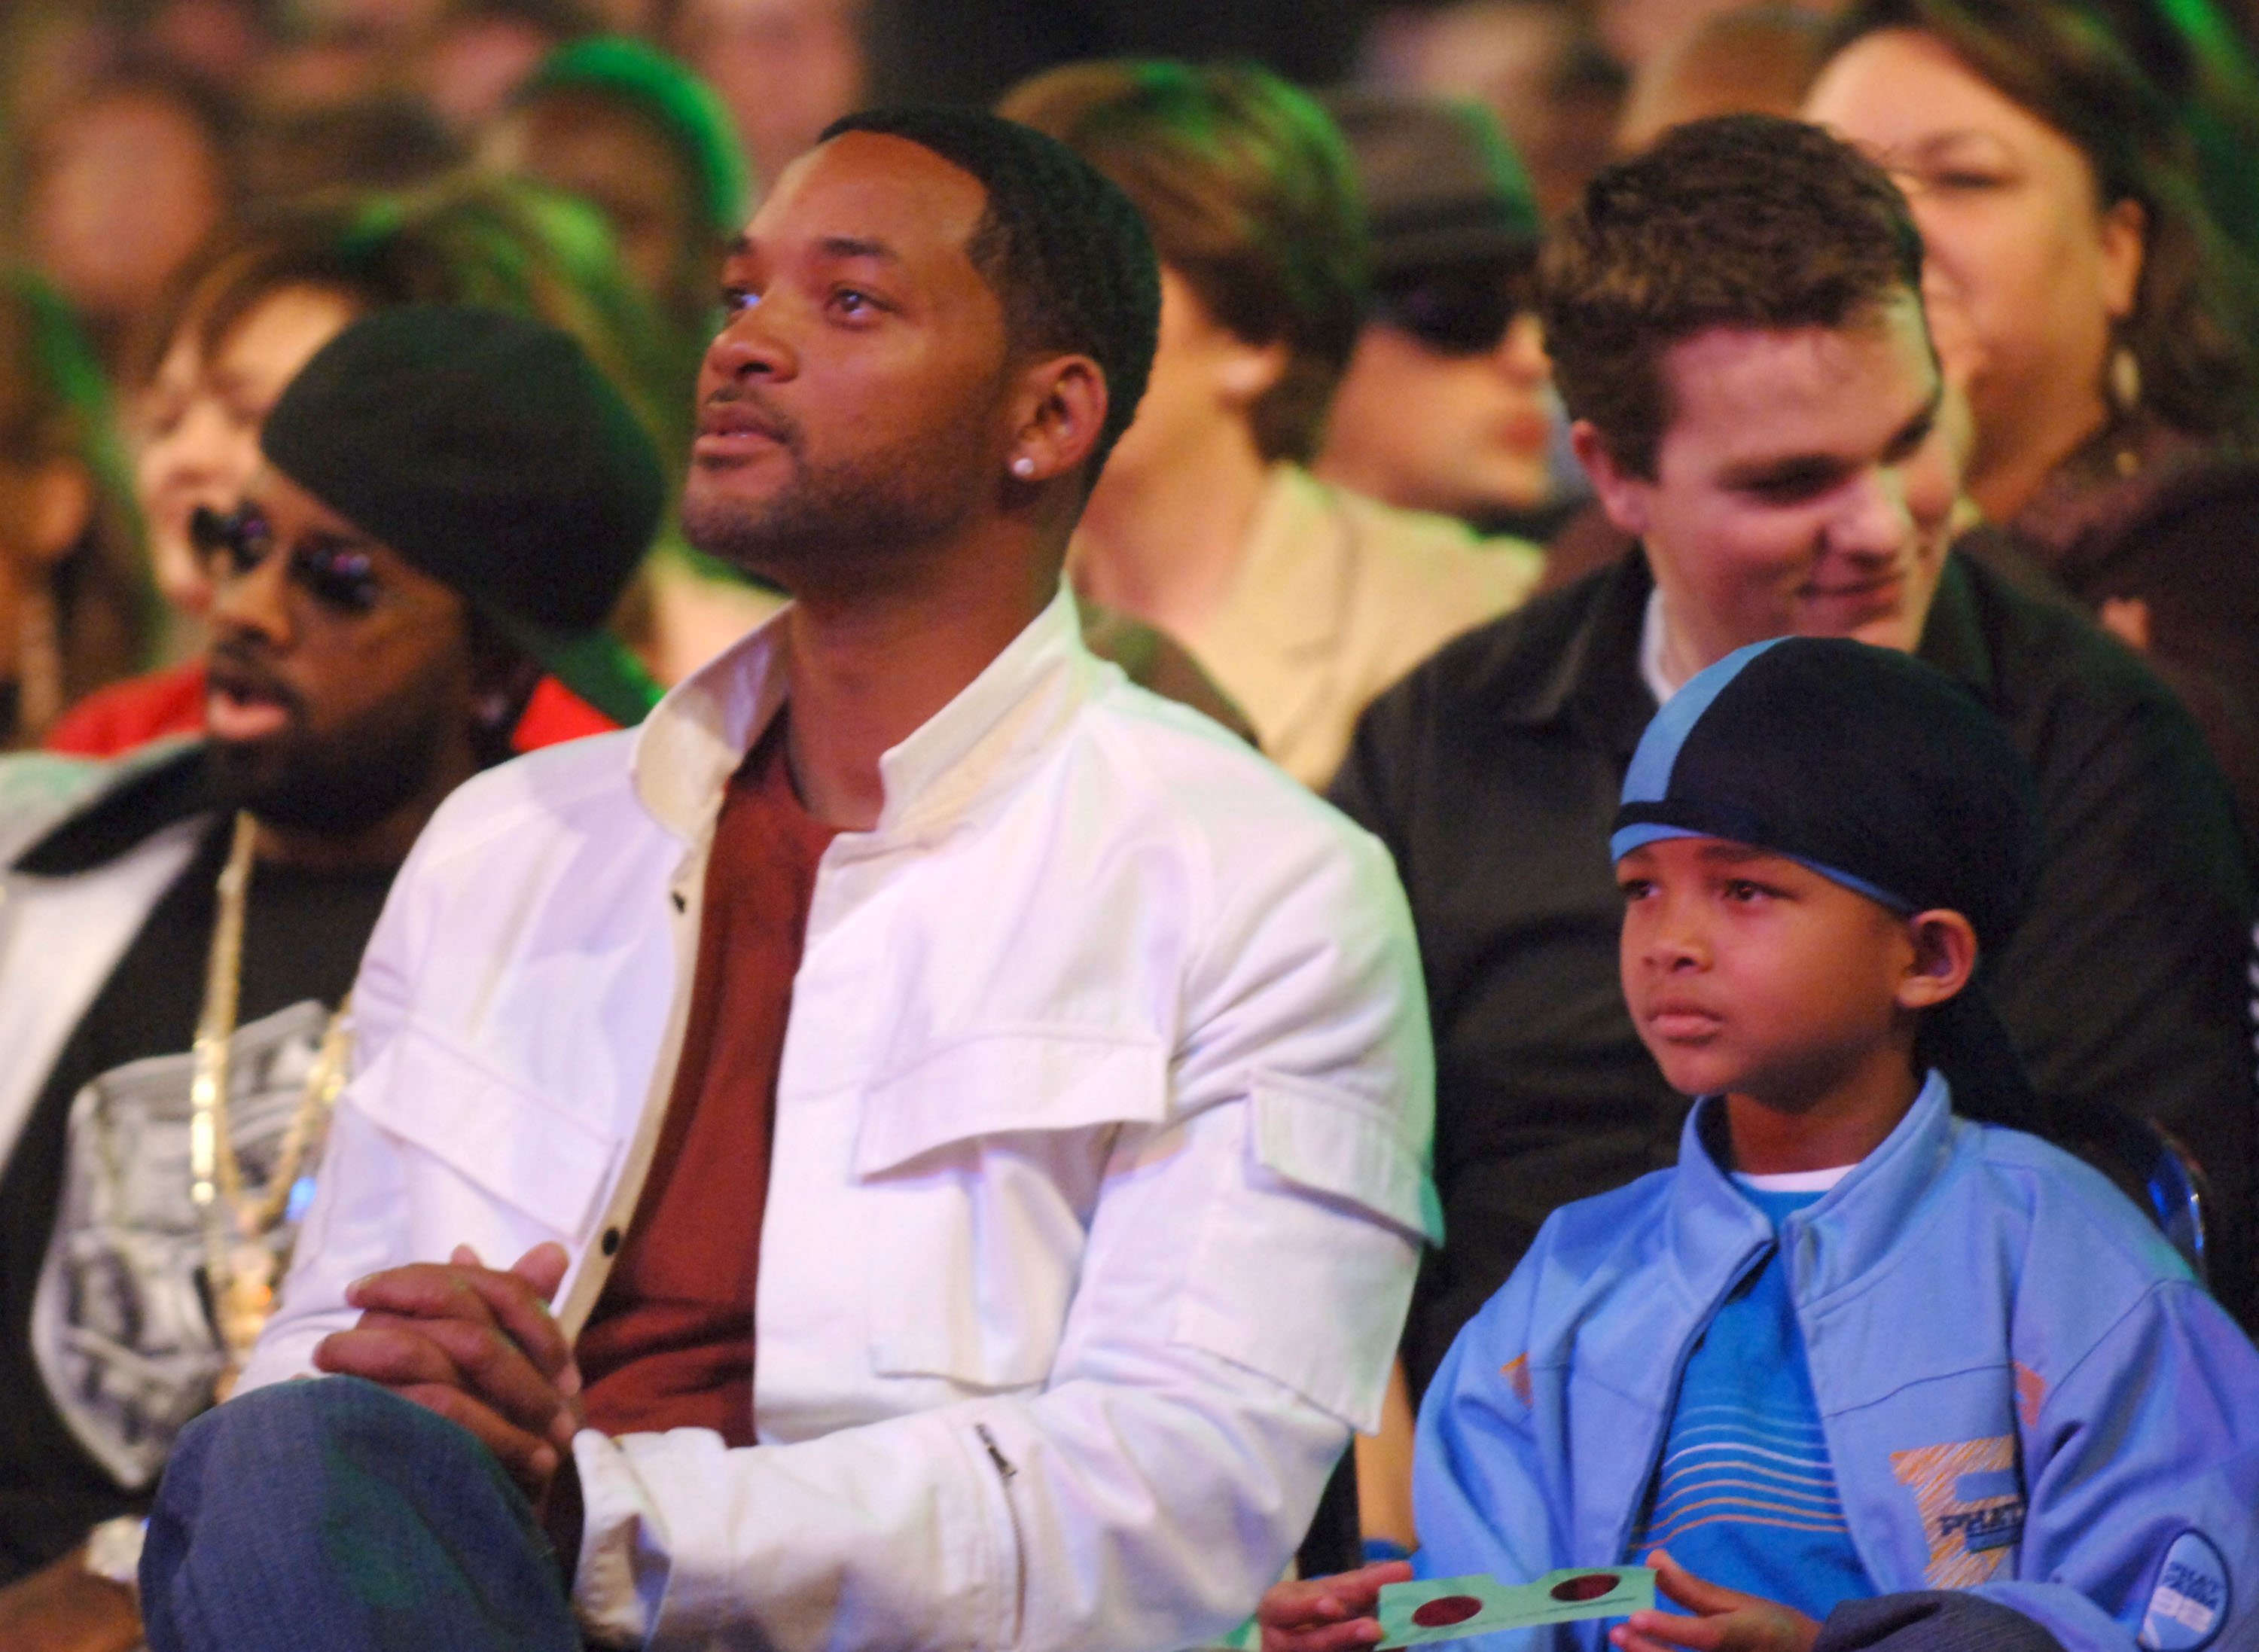 Will Smith and Jaden Smith at the Kids' Choice Awards